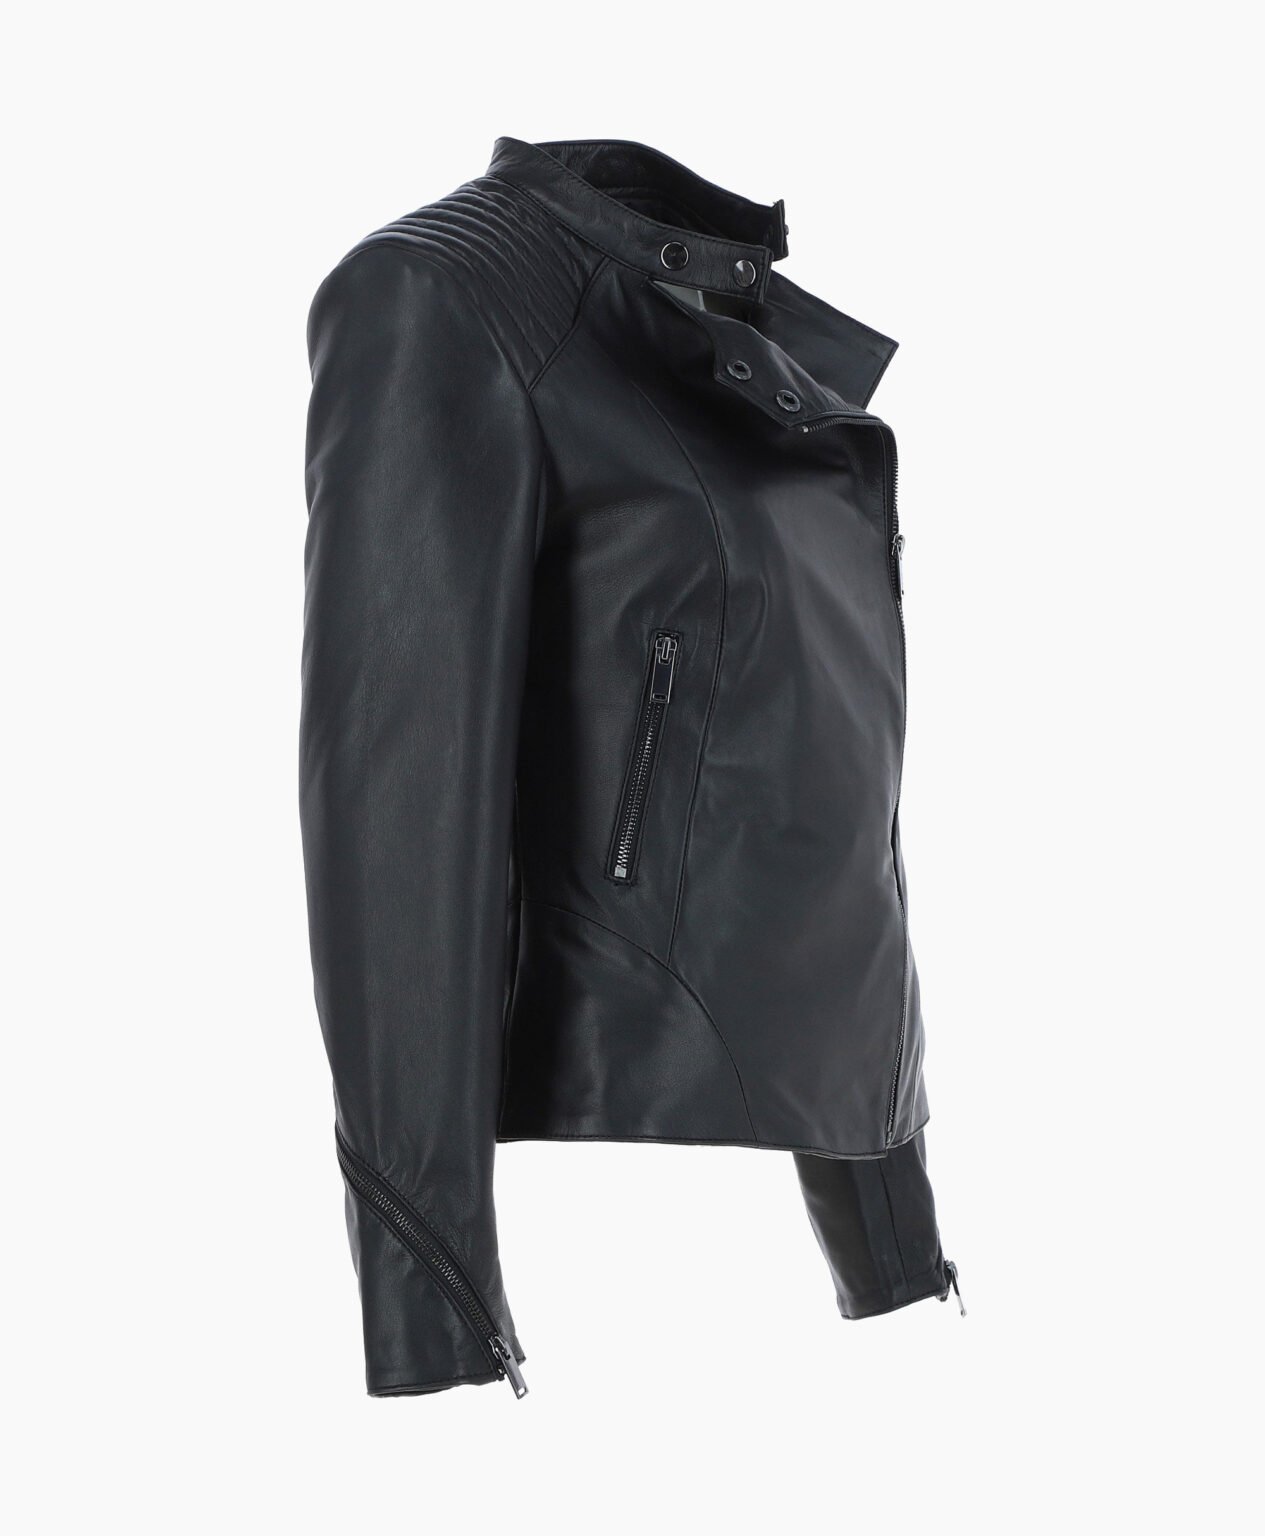 vogue-jacket-leather-biker-jacket-black-mundelein-image203